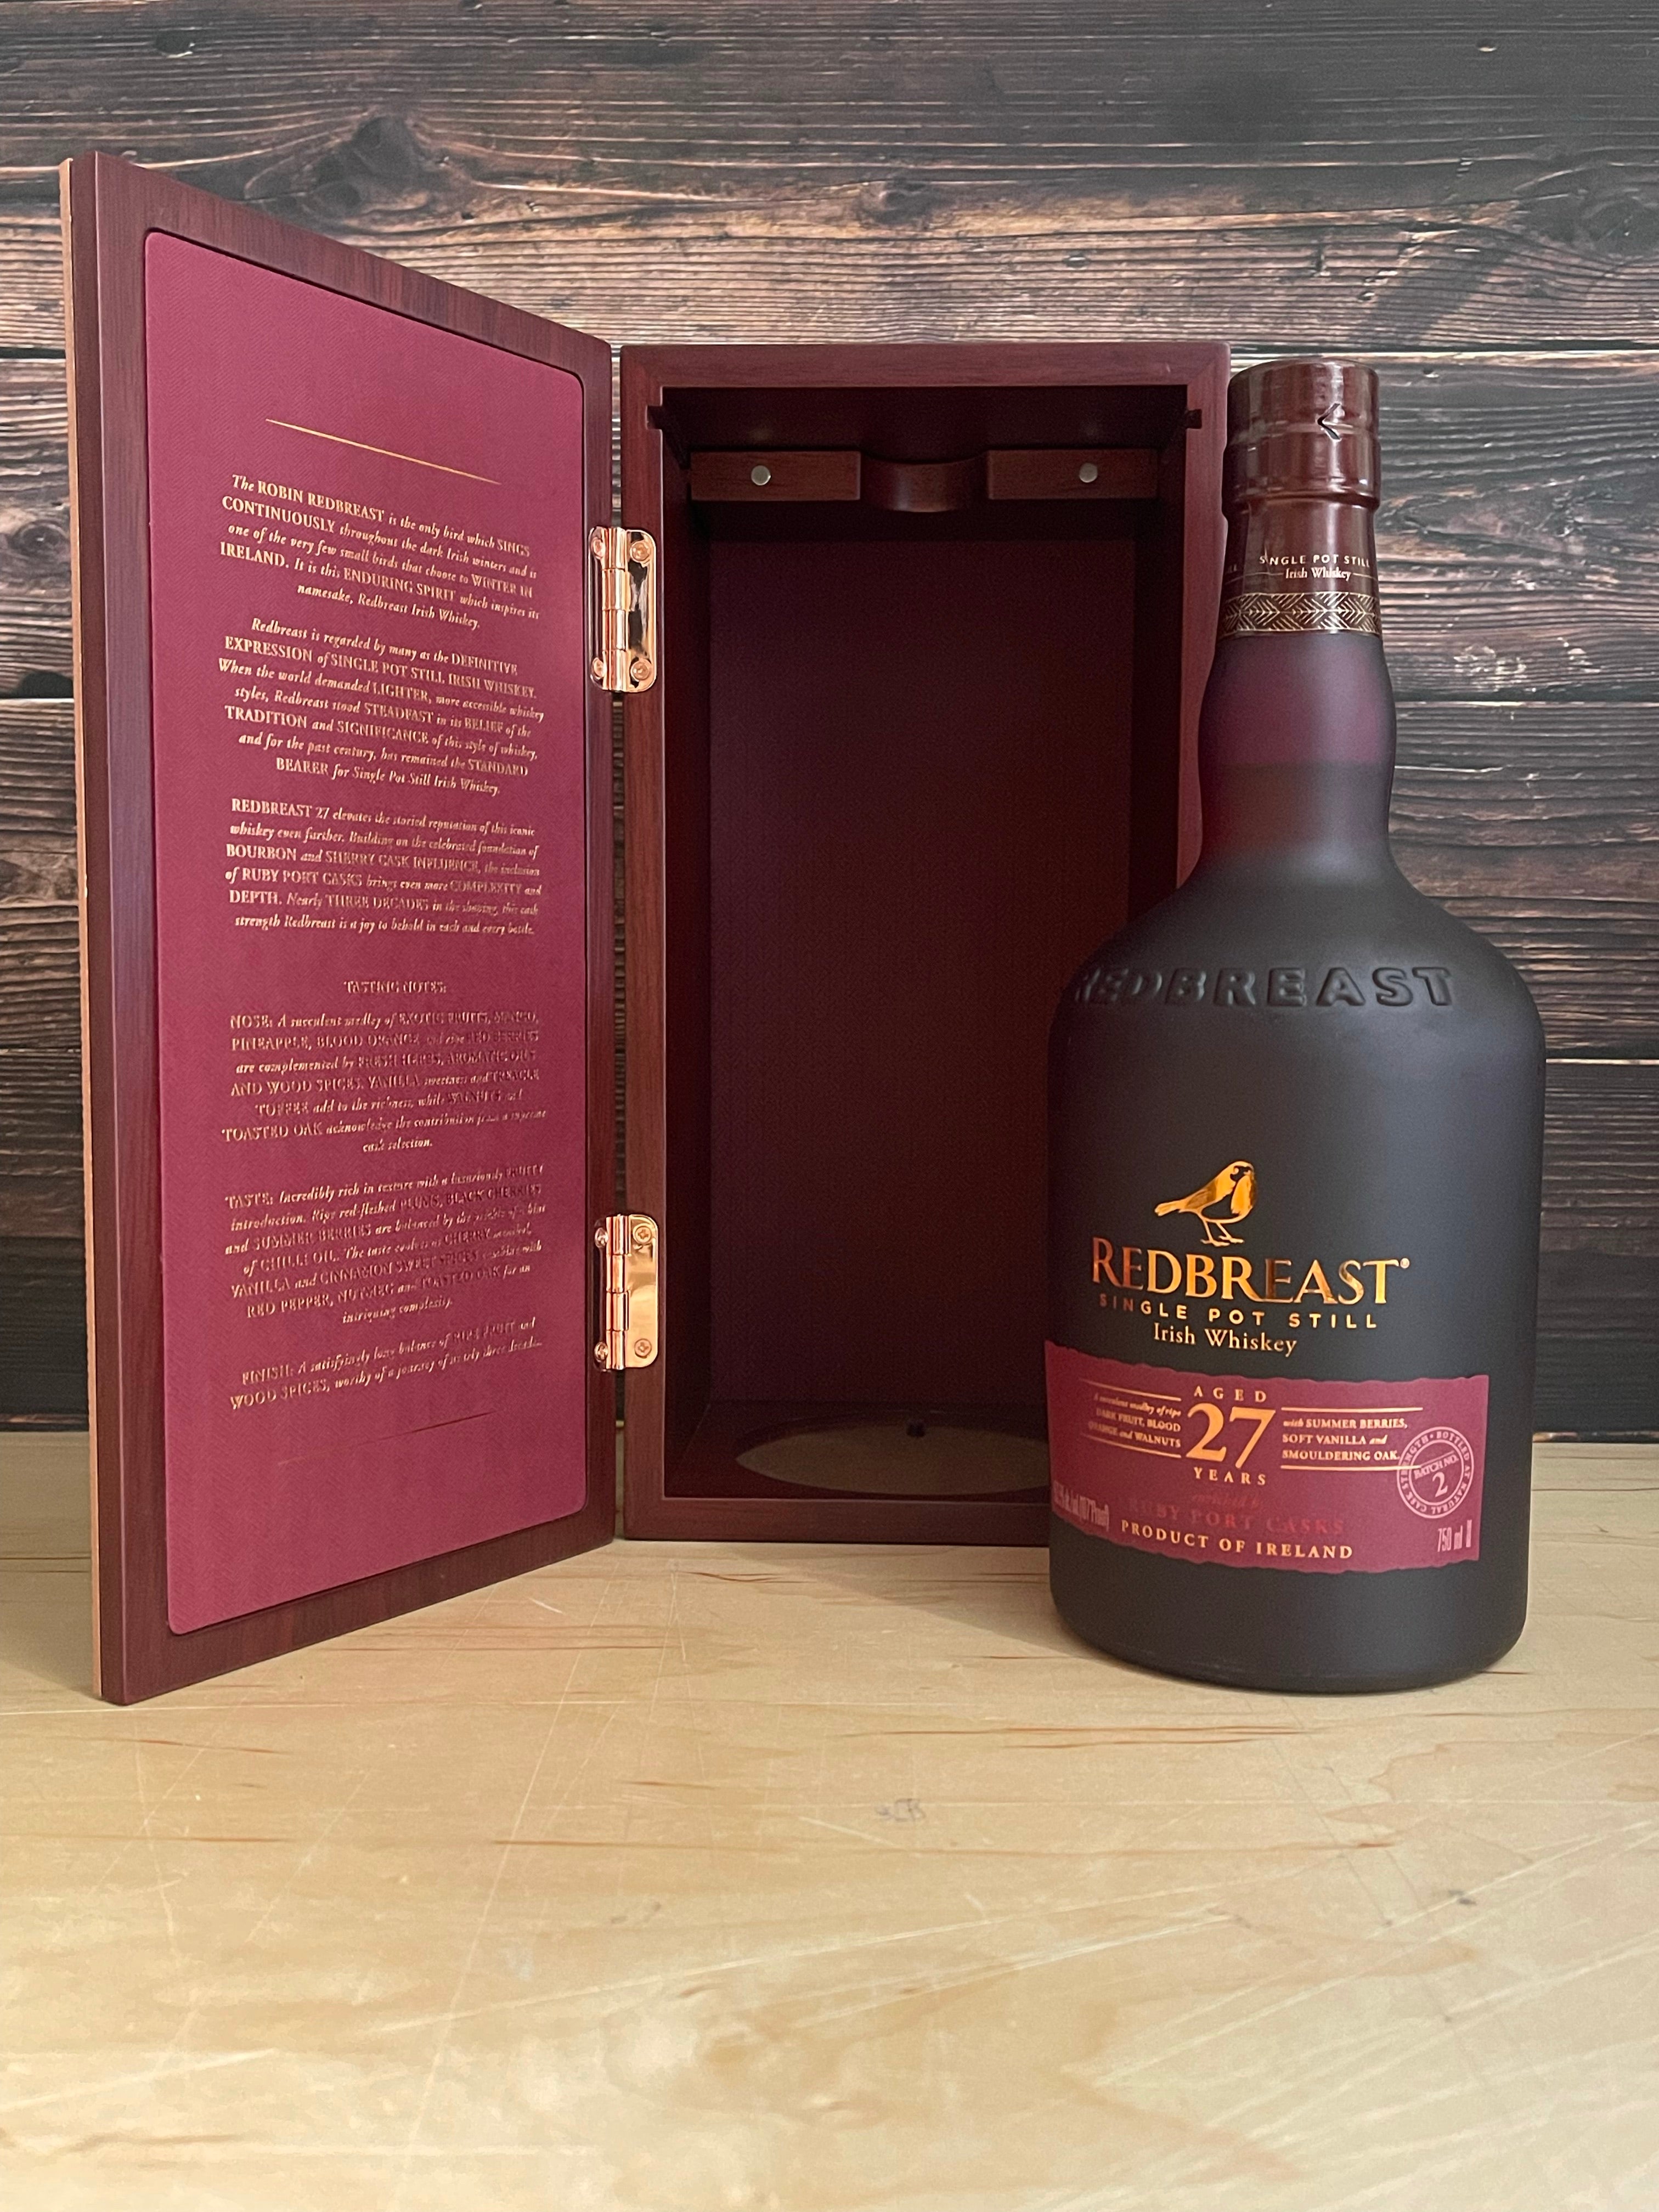 Redbreast Aged 27 Years Ruby Port Casks Single Pot Irish Whisky (2022 Edition)